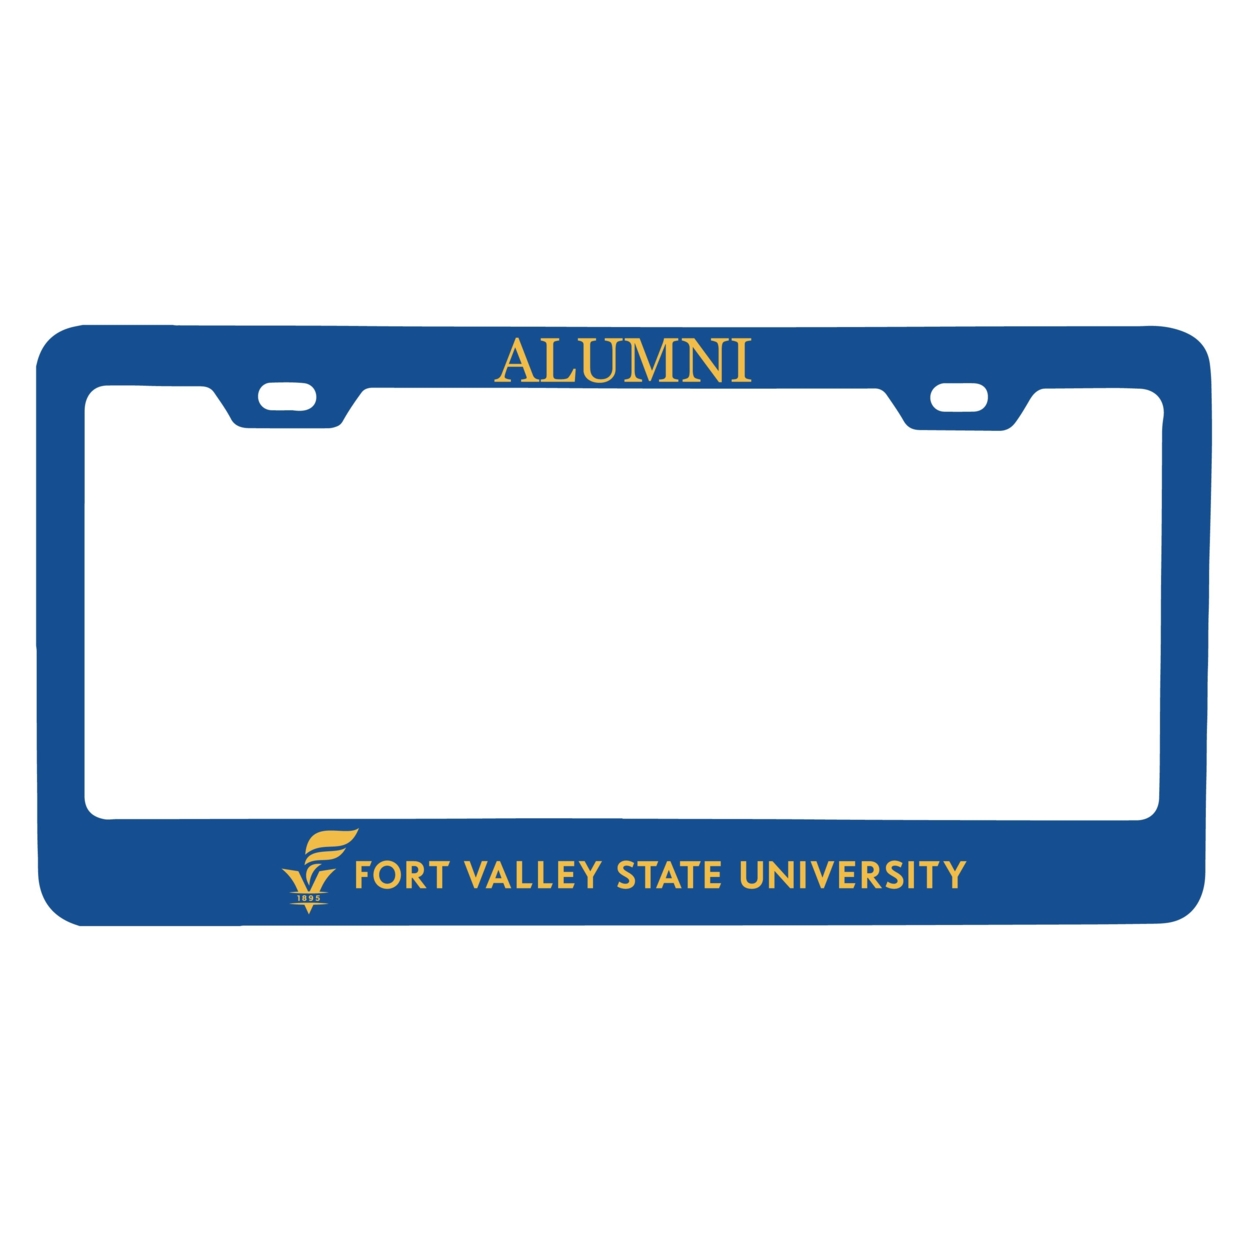 Fort Valley State University Alumni License Plate Frame